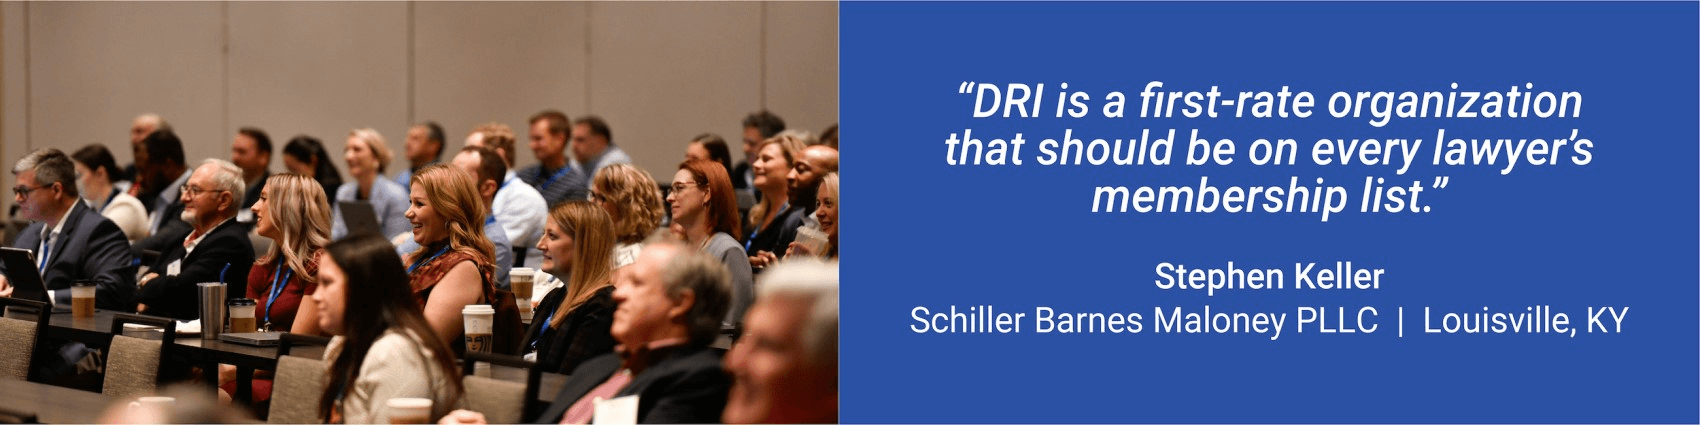 Become a member in the DRI community - membership diversity